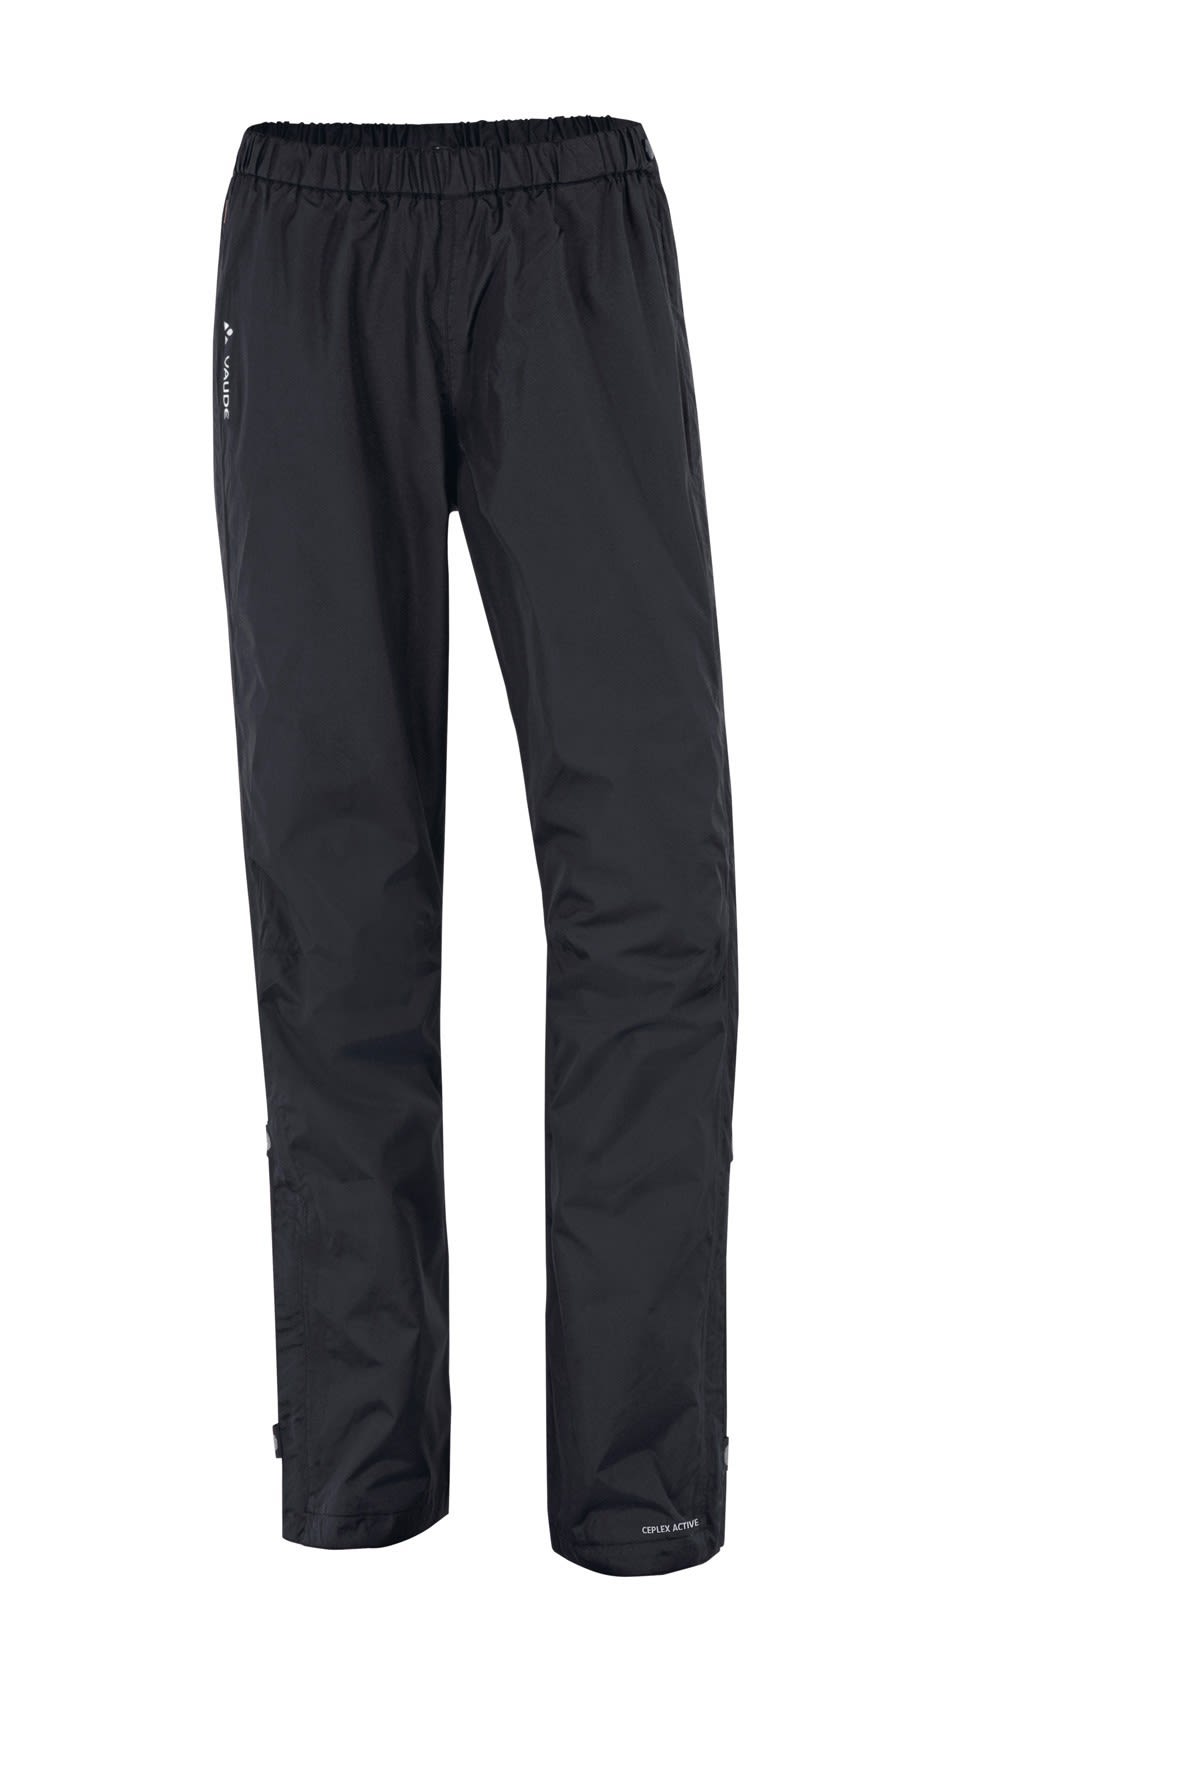 Vaude Fluid Full-Zip Pants Schwarz- Female Hosen- Grsse 36 - Farbe Black